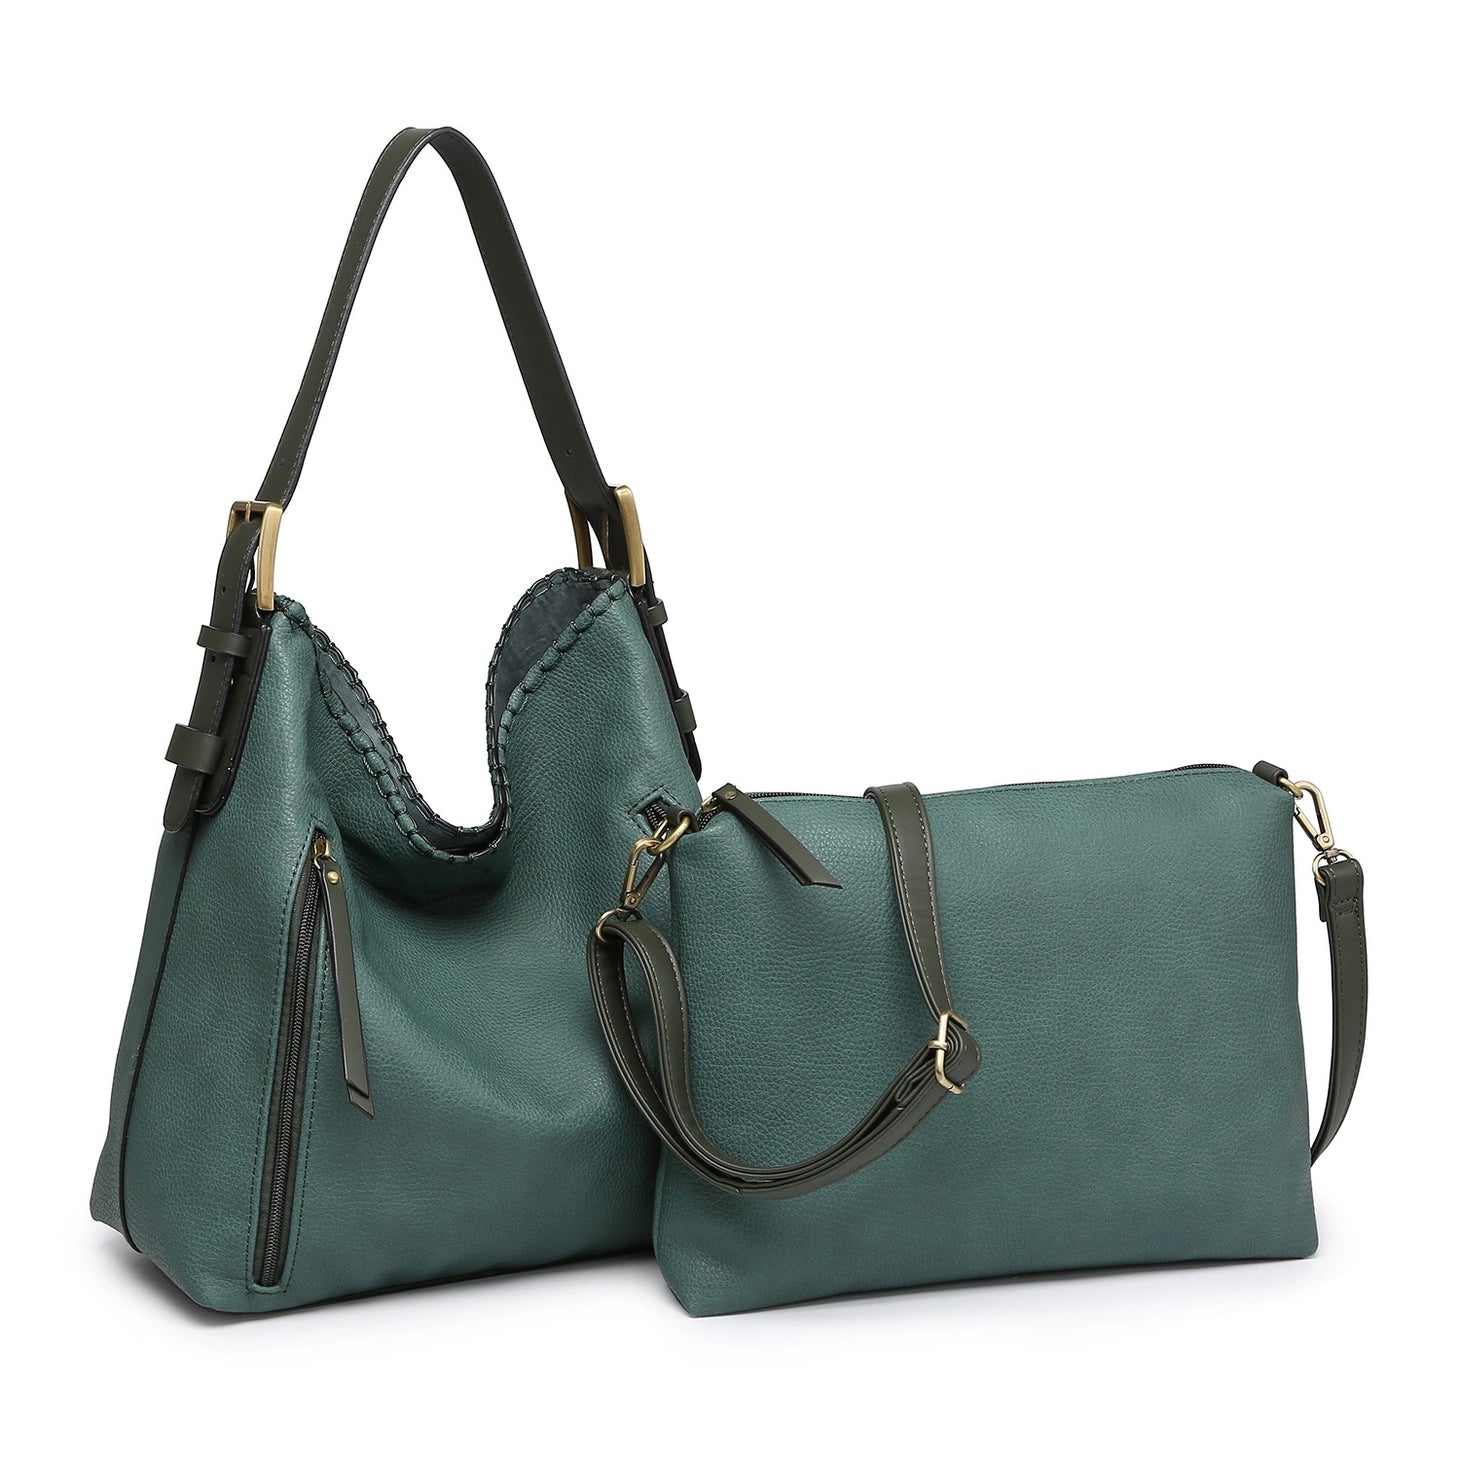 Buy FASHIONMYDAY Fashion My Day® Women Handbag Purse Satchel Hobo Bag  Quilted Tote Bag for Camping Lady Daily Green Shoes & Handbags|Handbags,  Purses & Clutches|Handbags|Totes at Amazon.in